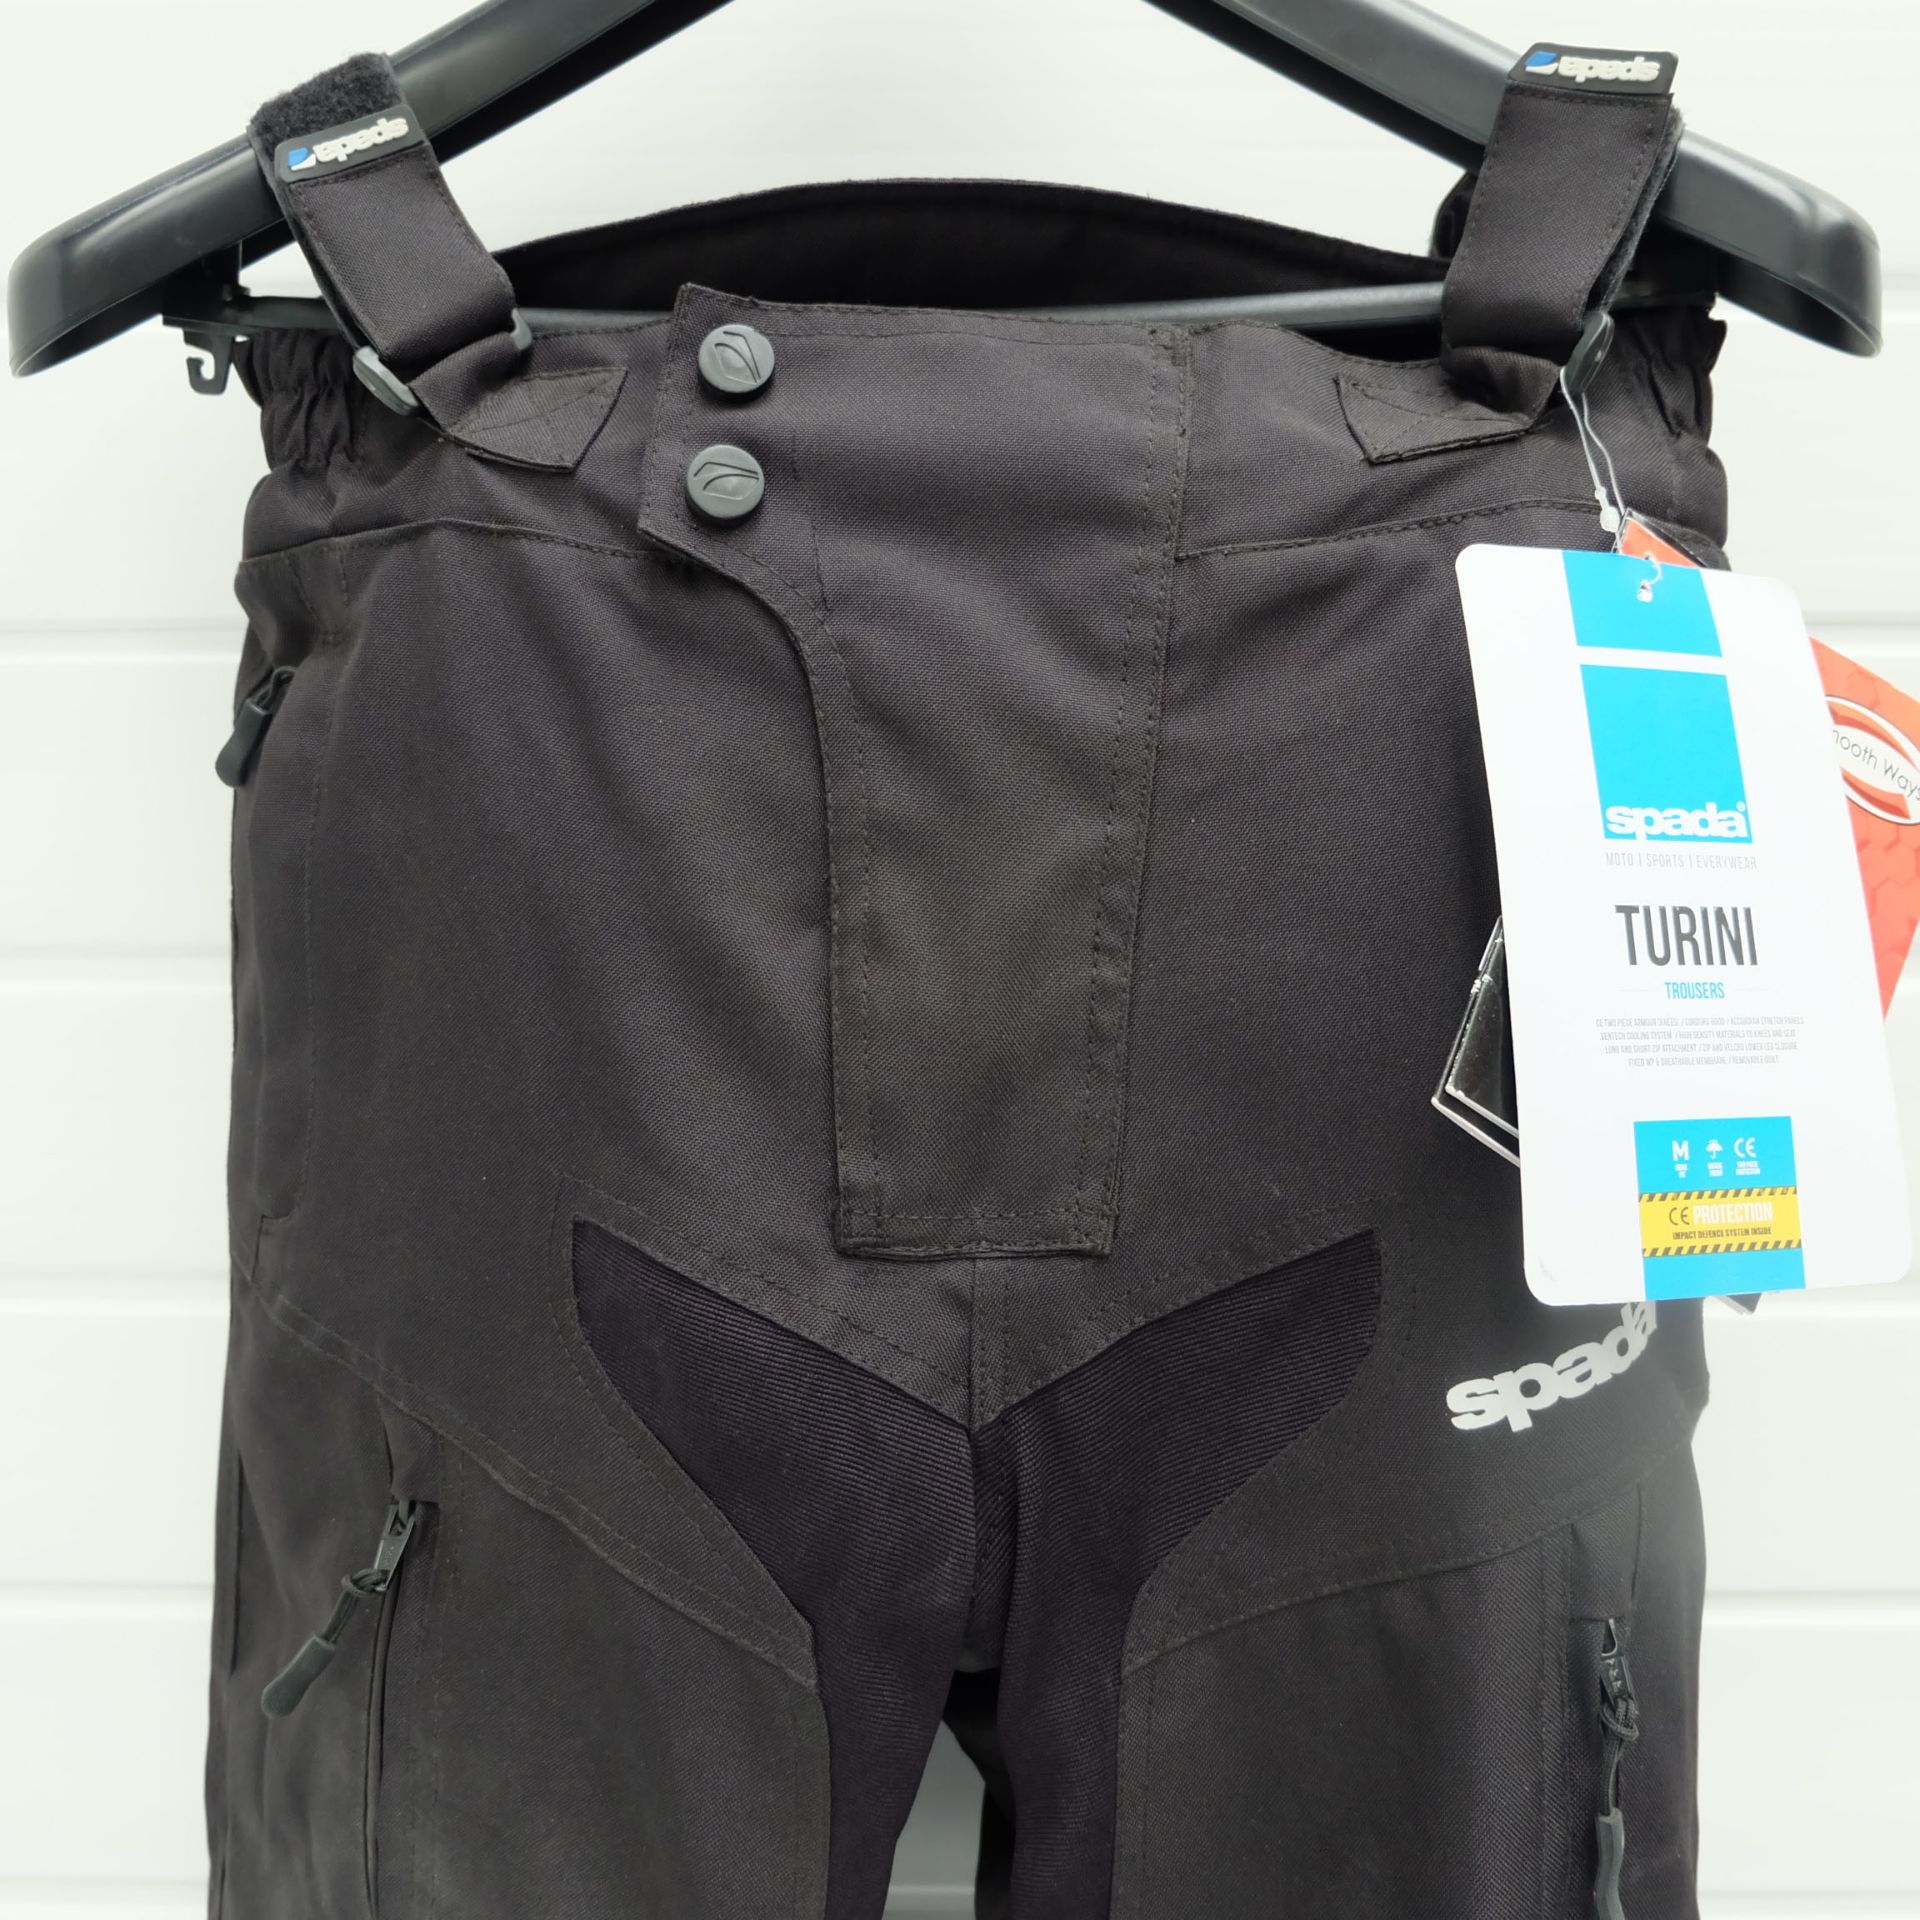 Spada Turini Motorcycle Trousers (Mens) Black. Medium - Image 2 of 10